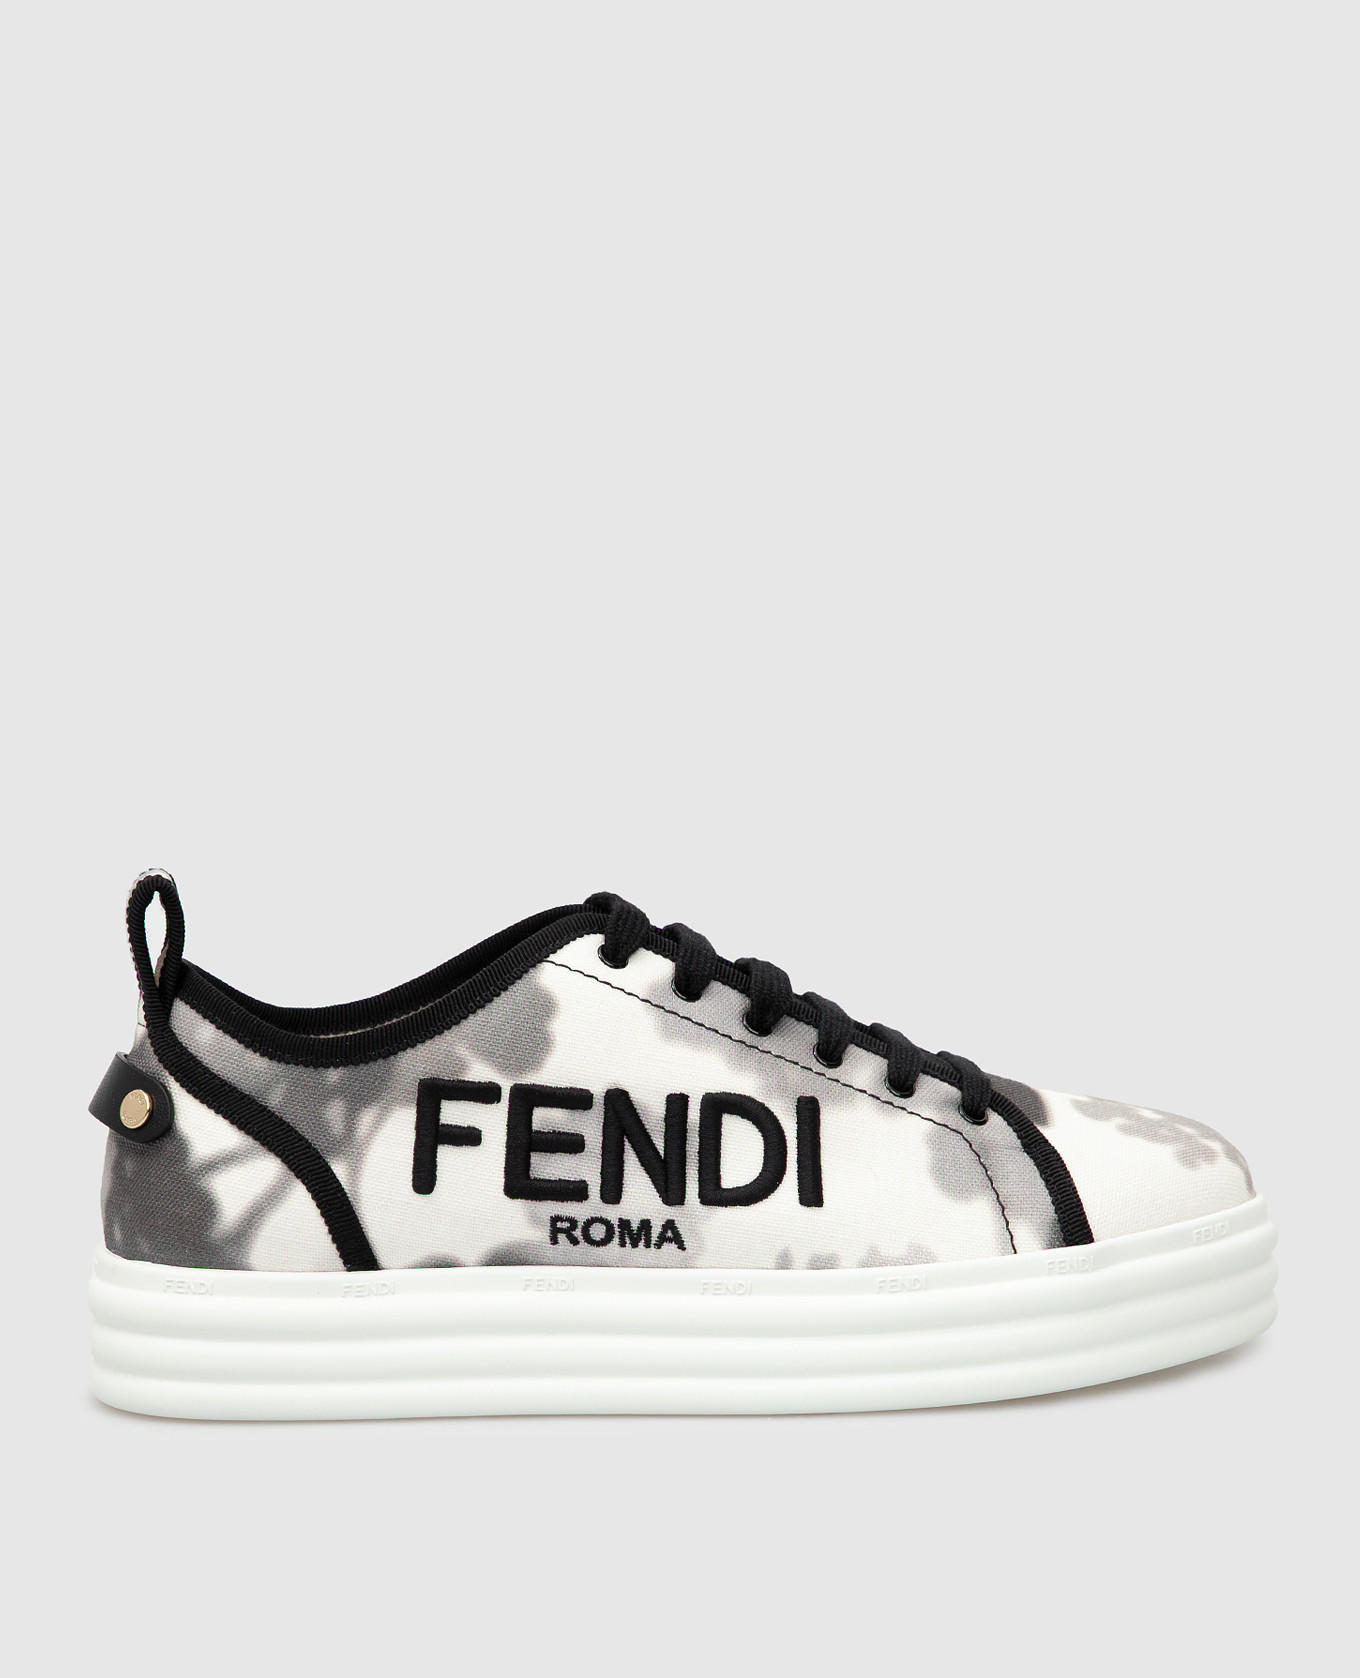 Сникеры "Fendi Rise" с вышивкой логотипа Fendi